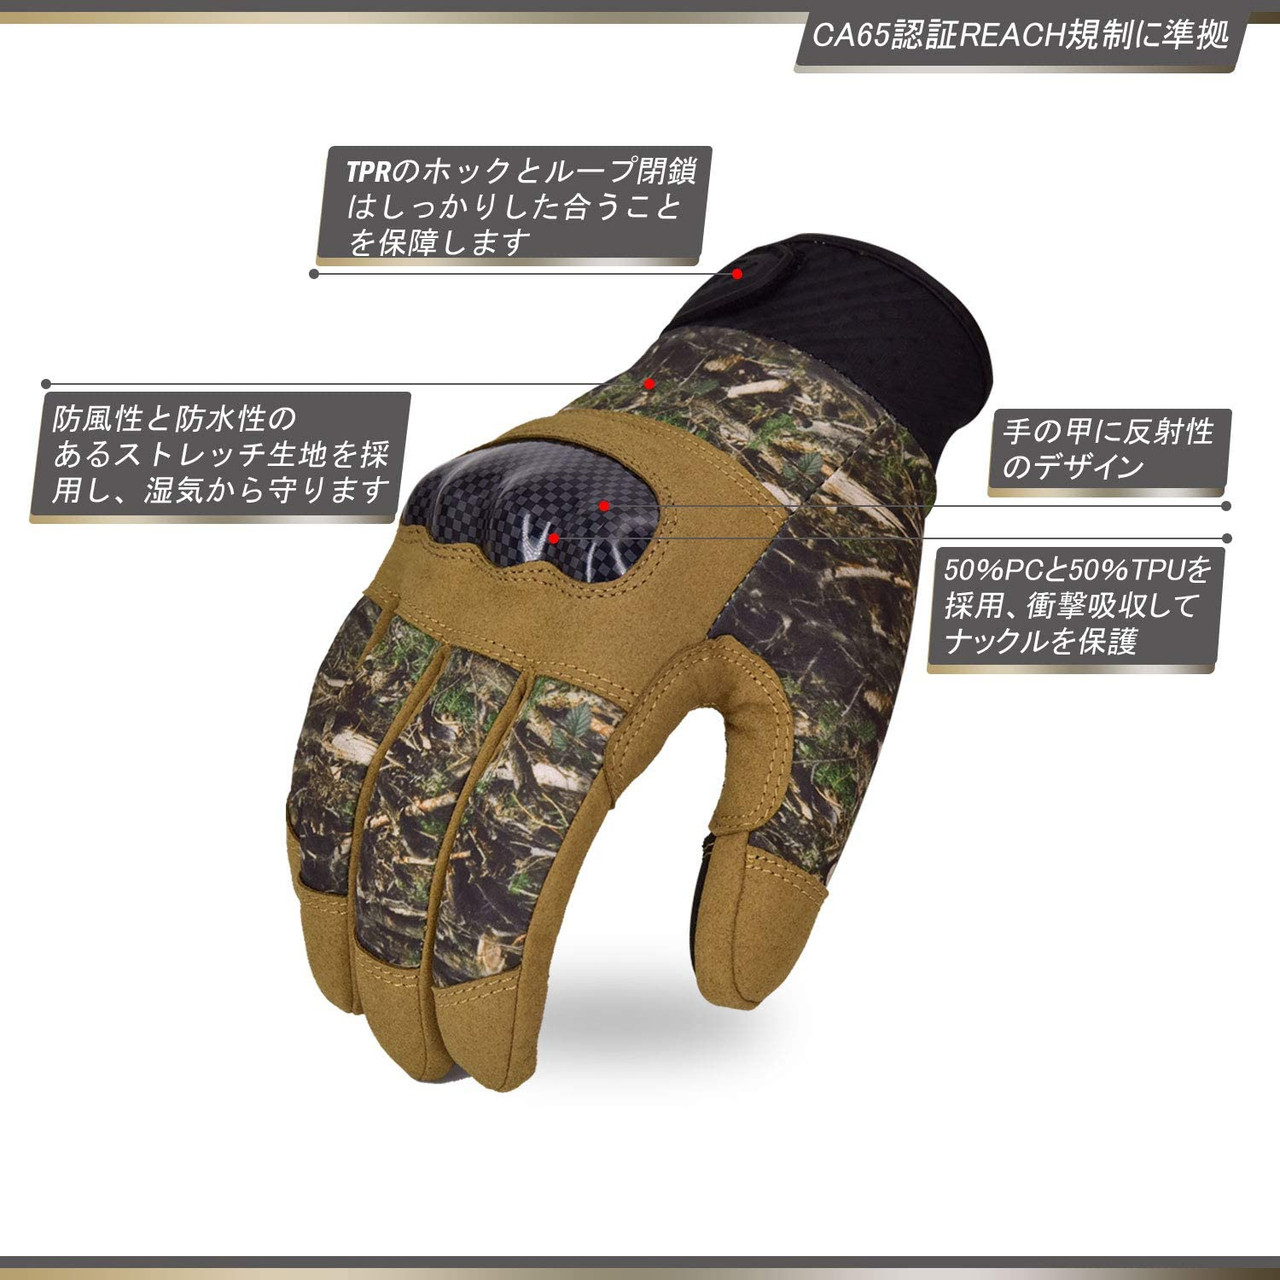 Vgo 1 Twin Pack Men's Sabbage Glove Camouflage Full Finger Gloves Hunting Camouflage